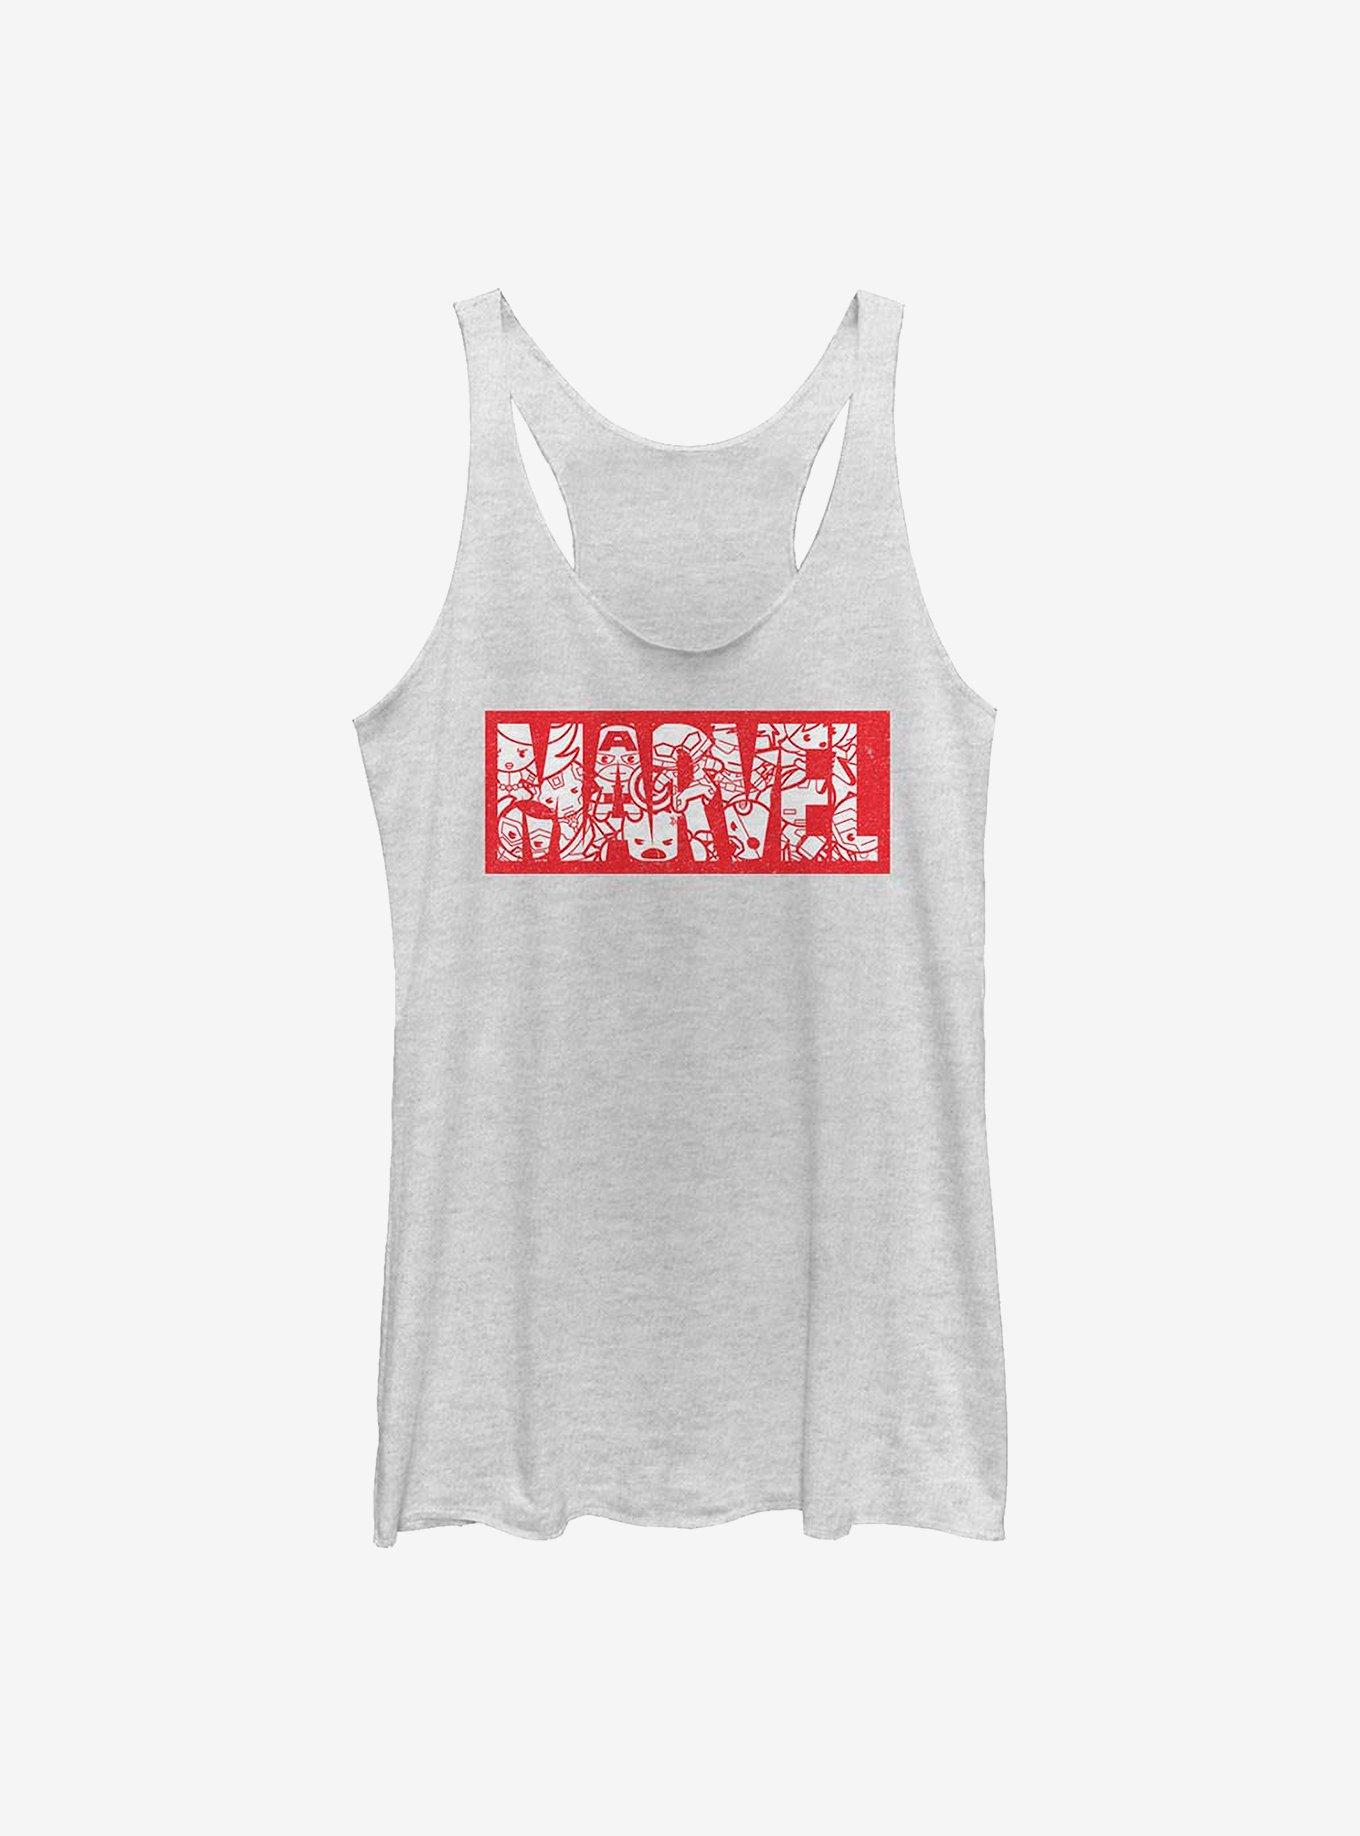 Marvel Avengers Kawaii Girls Tank